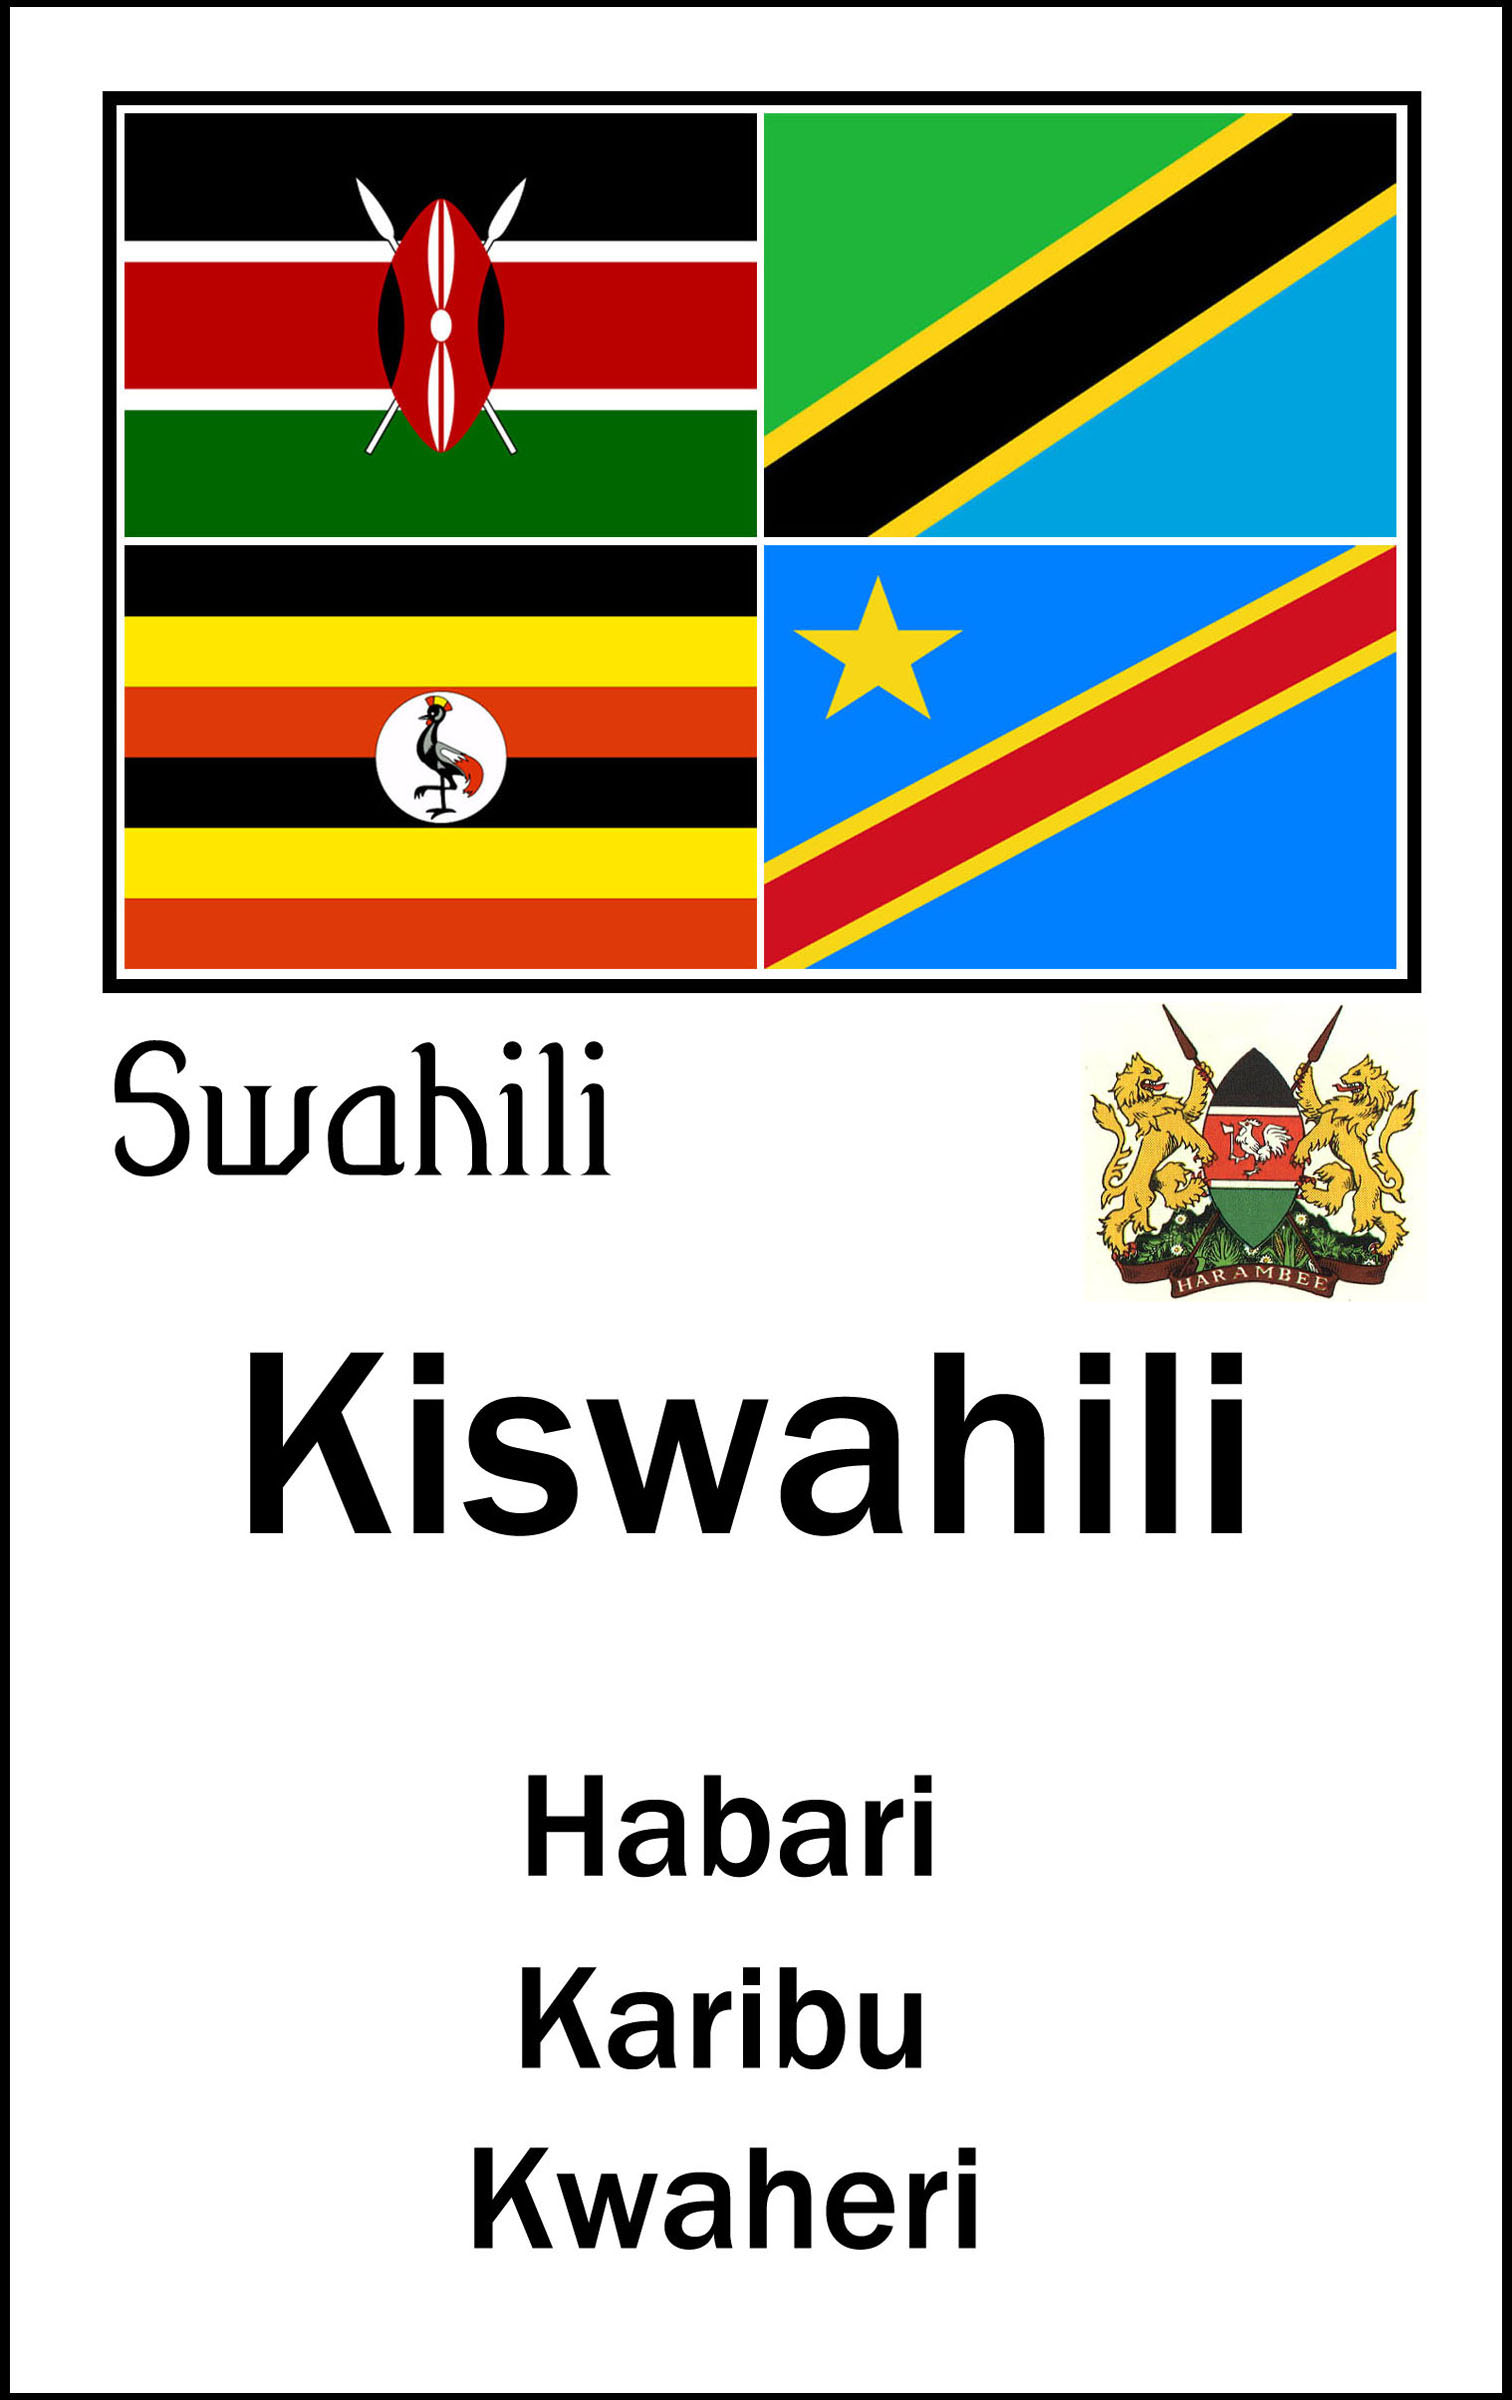 Swahili flyer